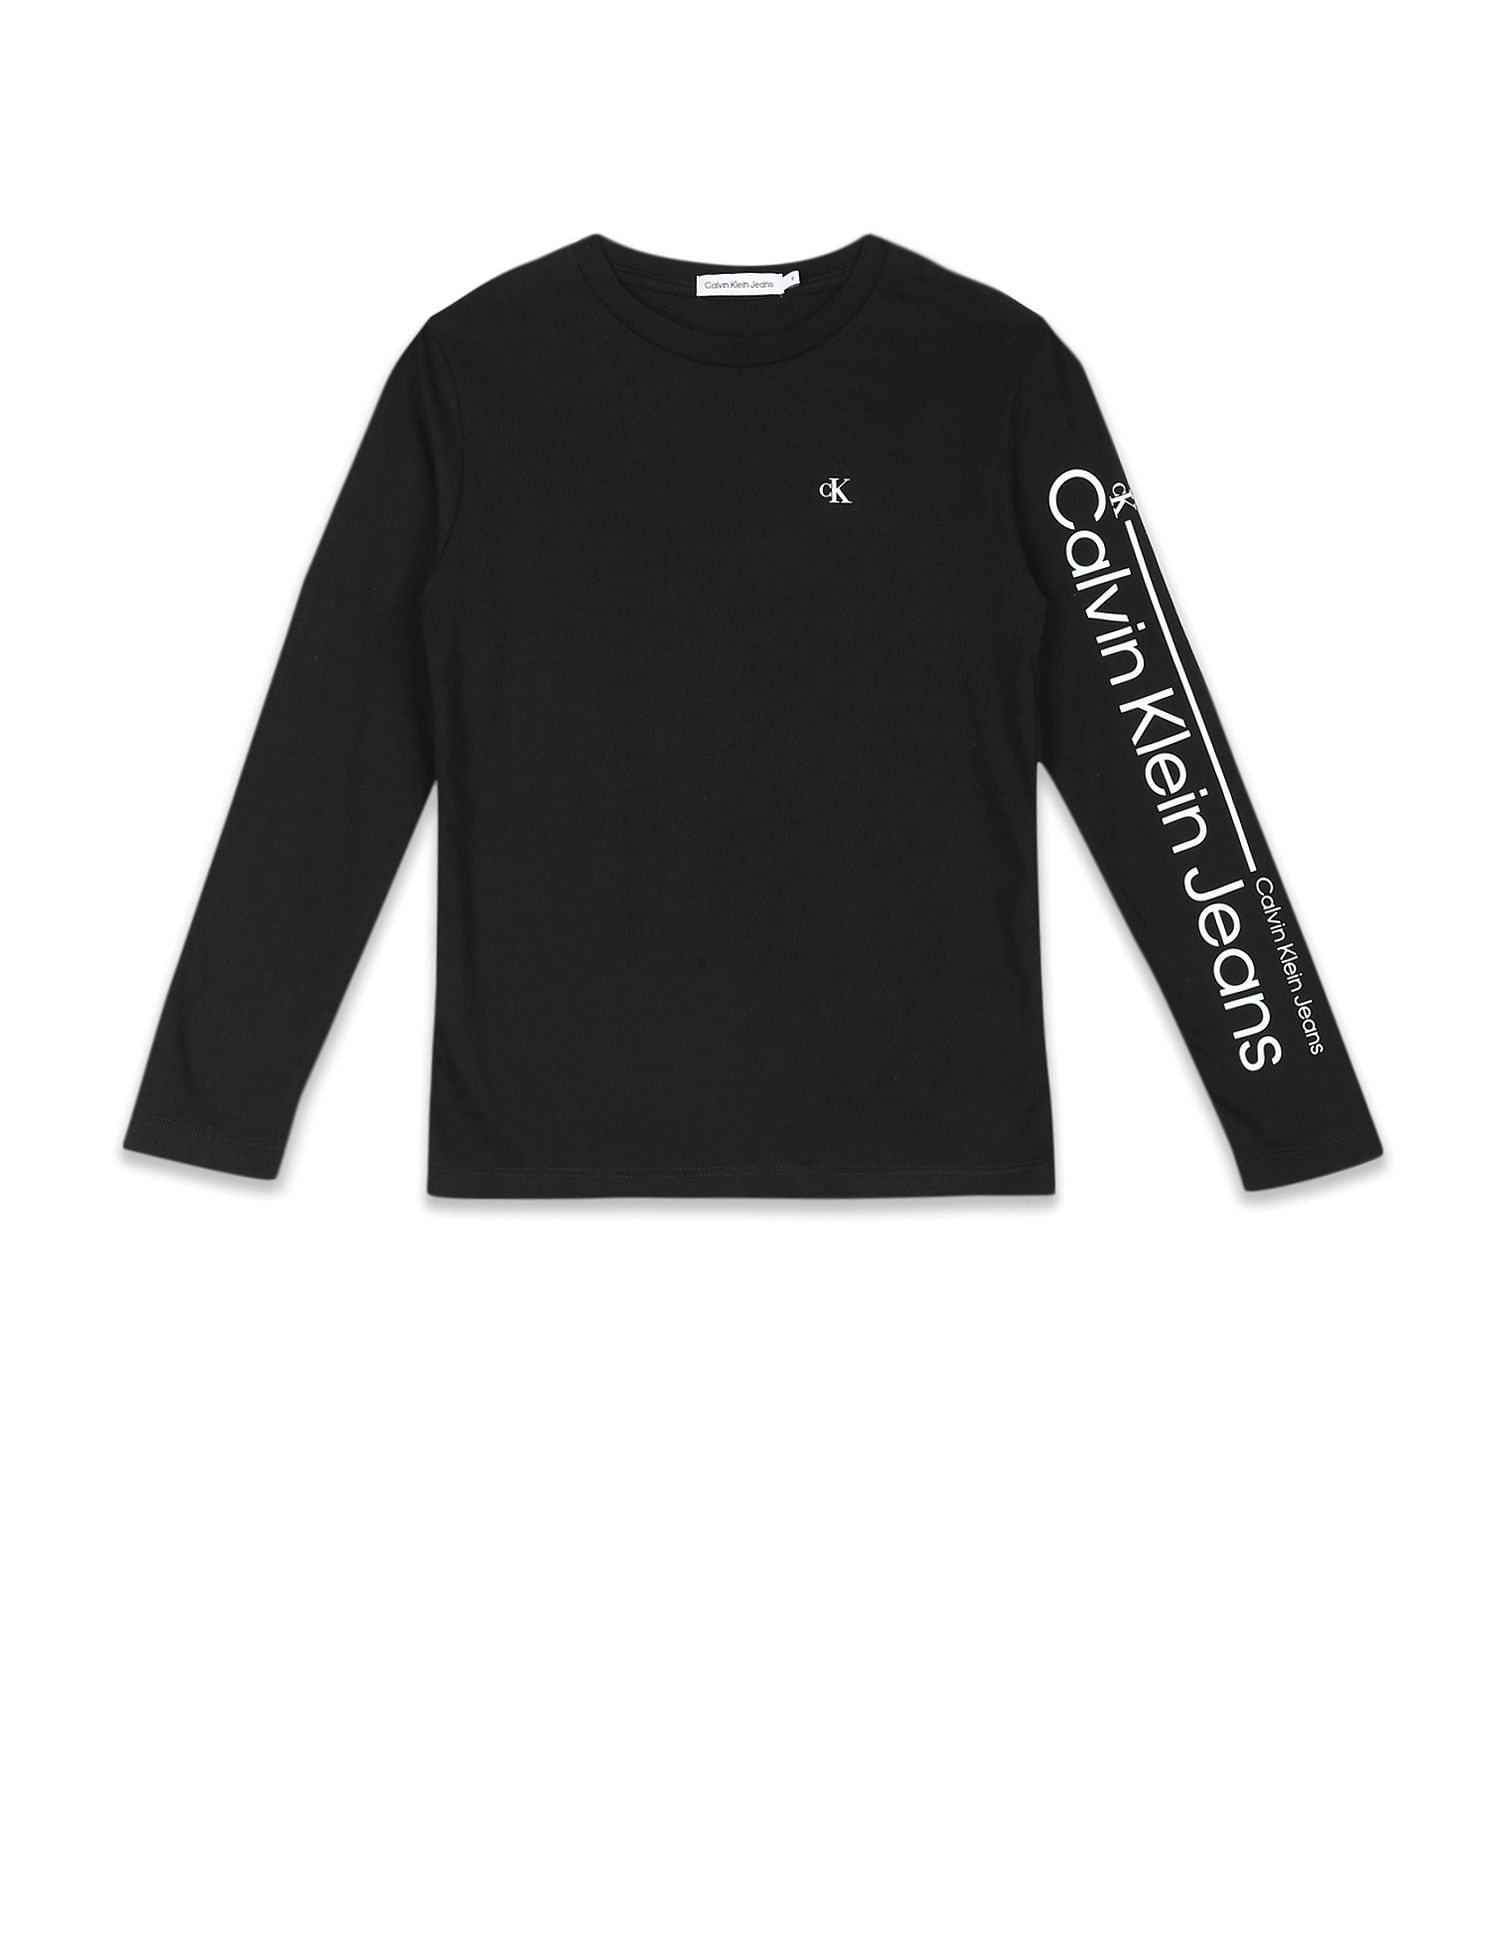 Logo Sleeve Klein Jeans Long Buy Black T-Shirt Boys Calvin